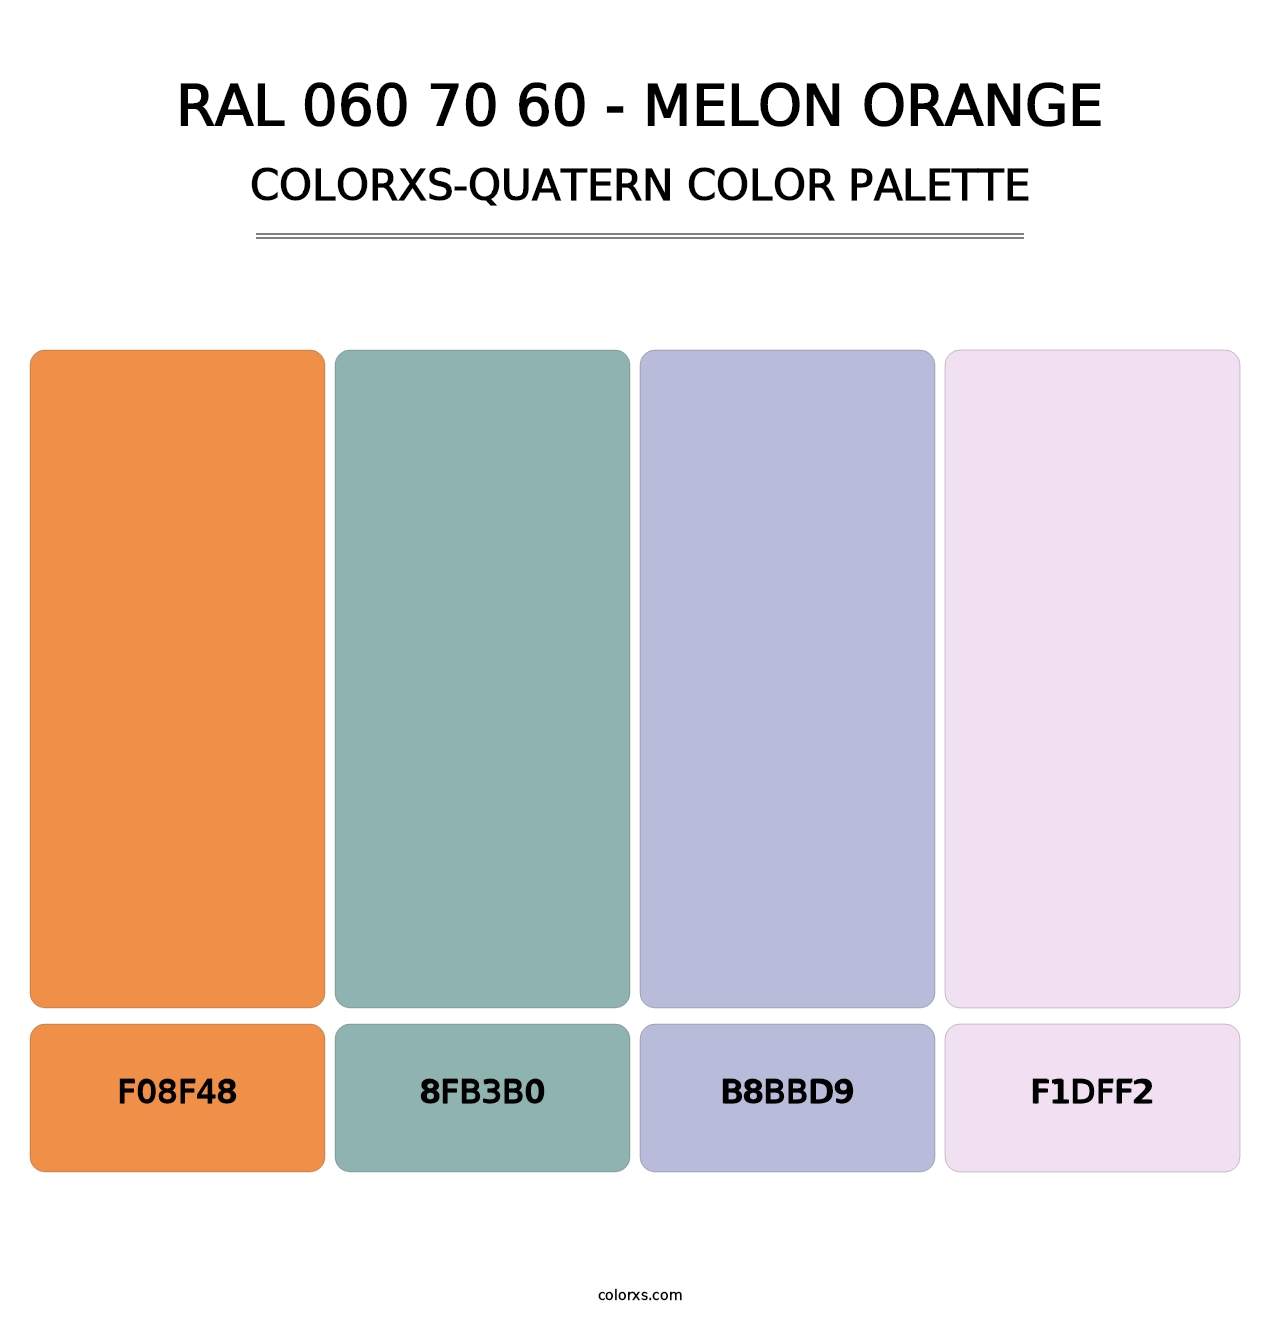 RAL 060 70 60 - Melon Orange - Colorxs Quatern Palette